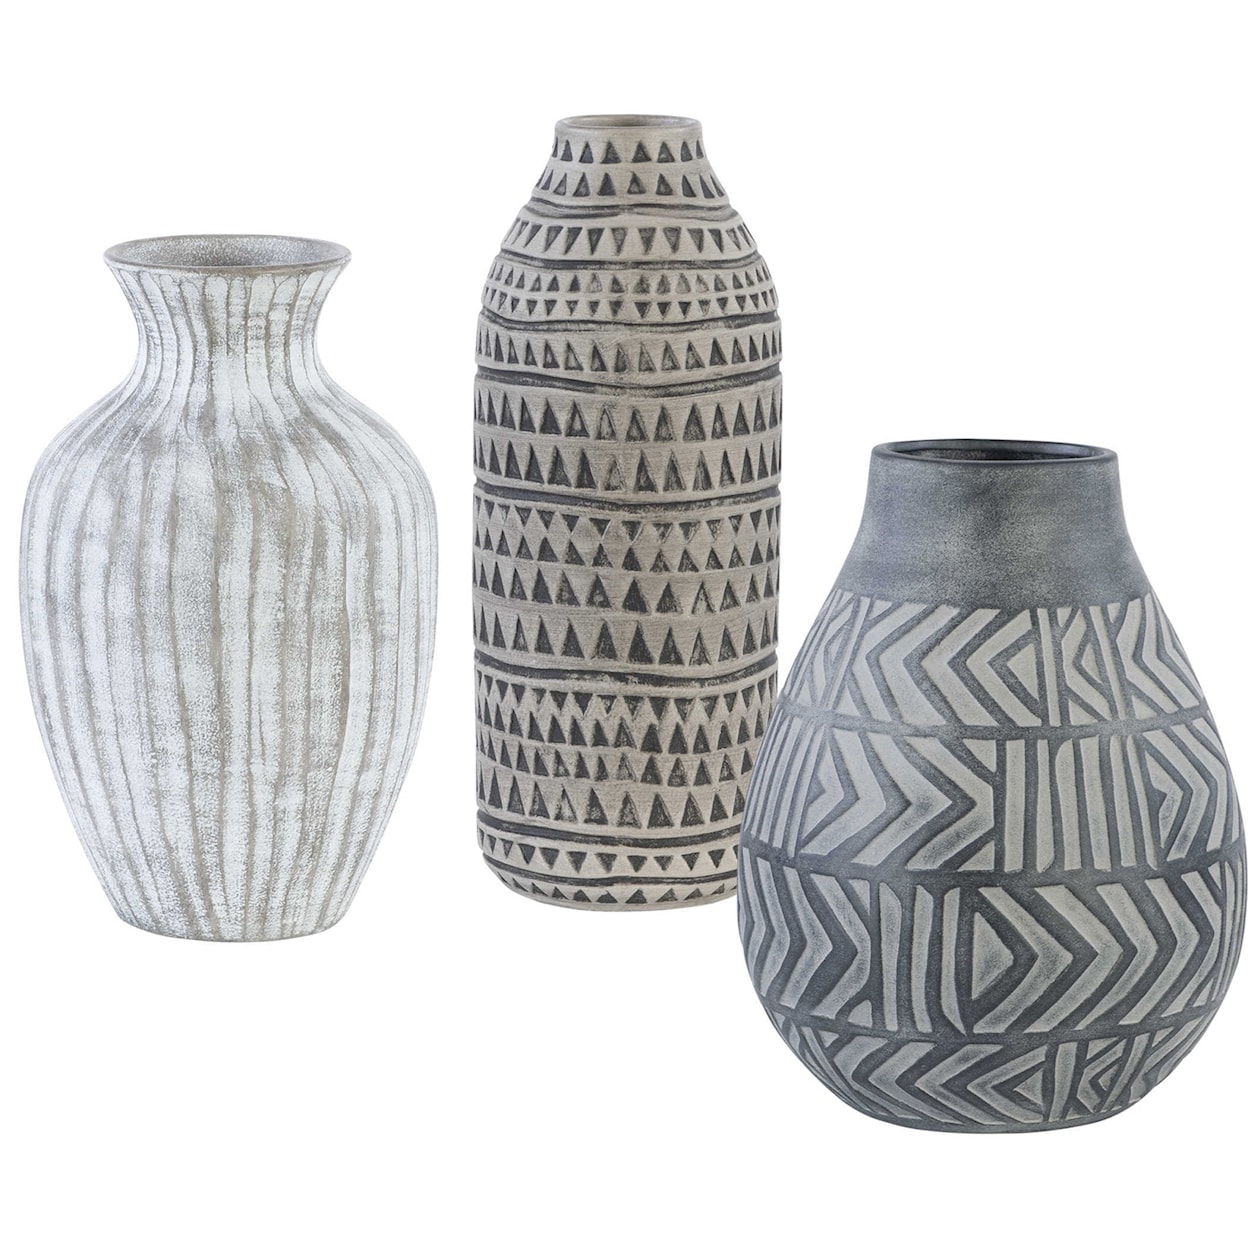 Uttermost Accessories - Vases and Urns Natchez Geometric Vases, S/3